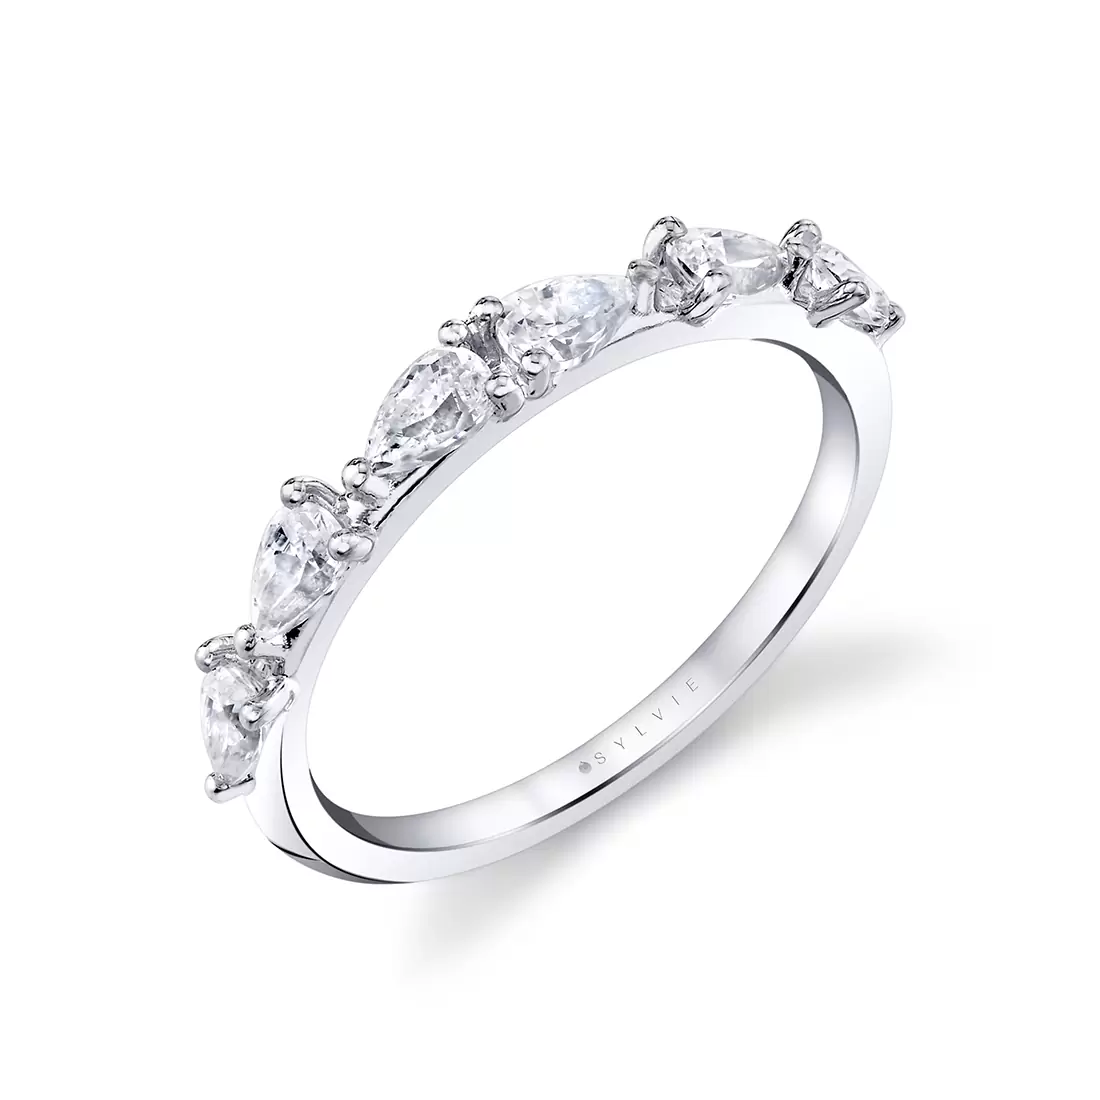 White gold, pear-shaped diamond wedding ring